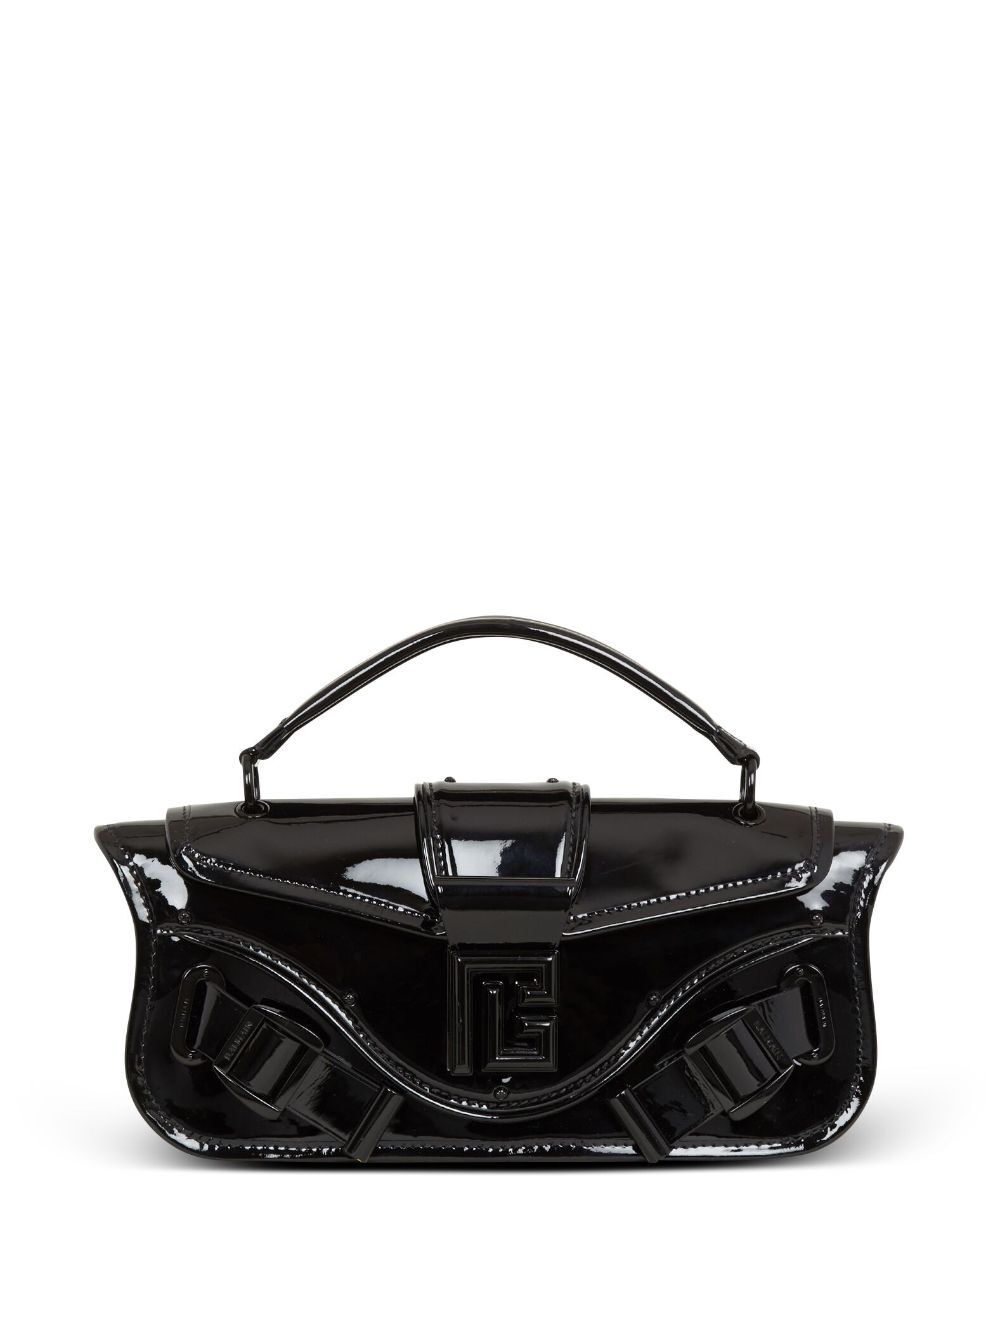 Balmain Blaze patent leather clutch bag - Black